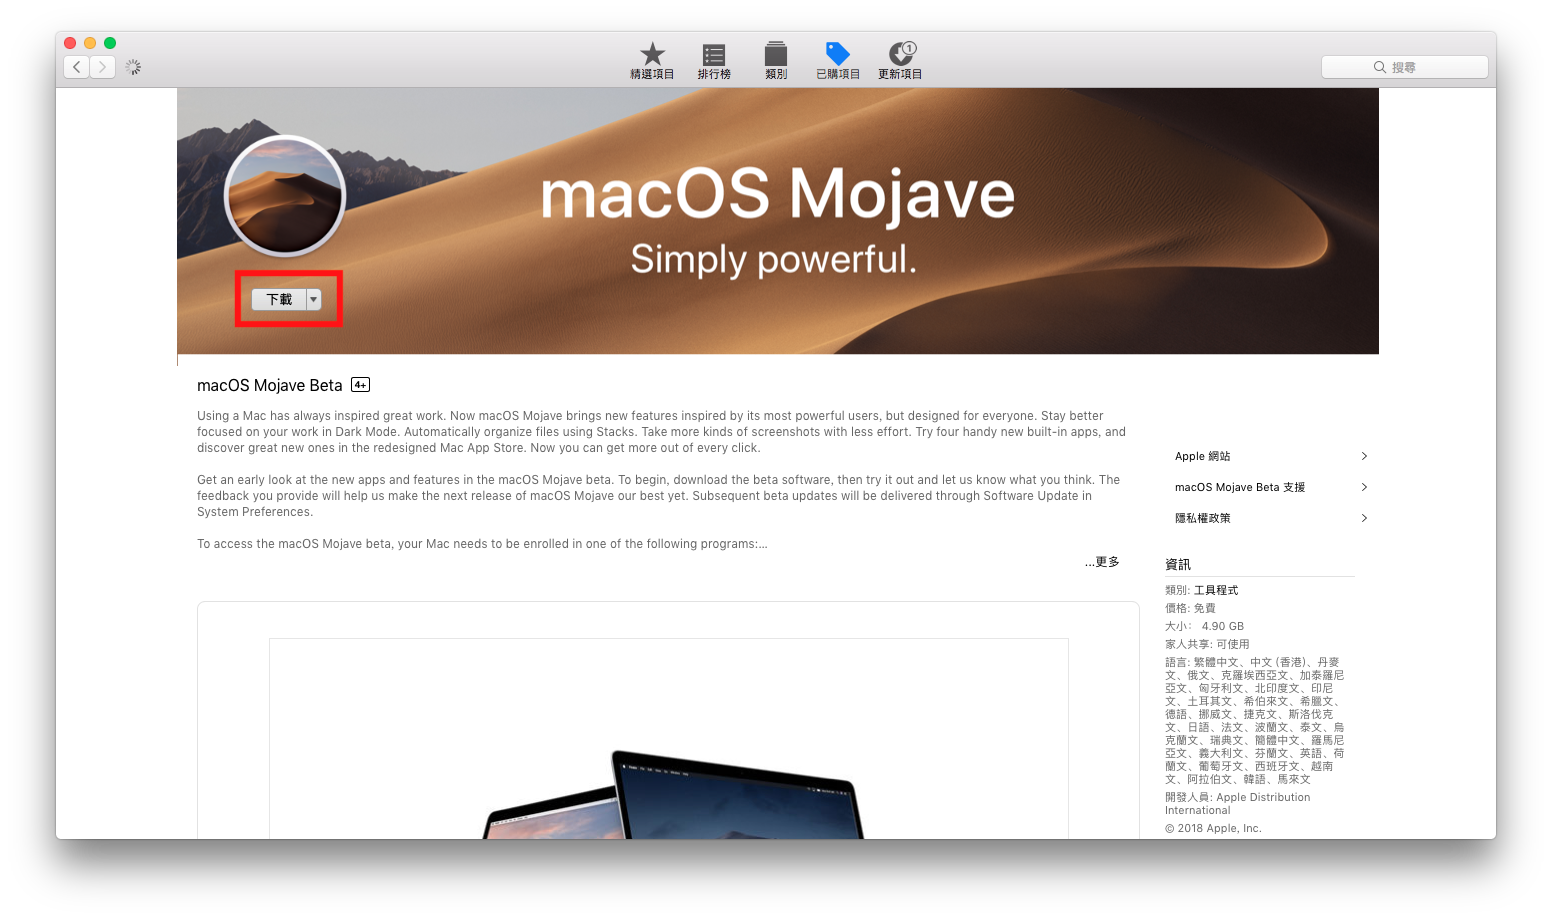 macOS 10.14 Beta 公測版